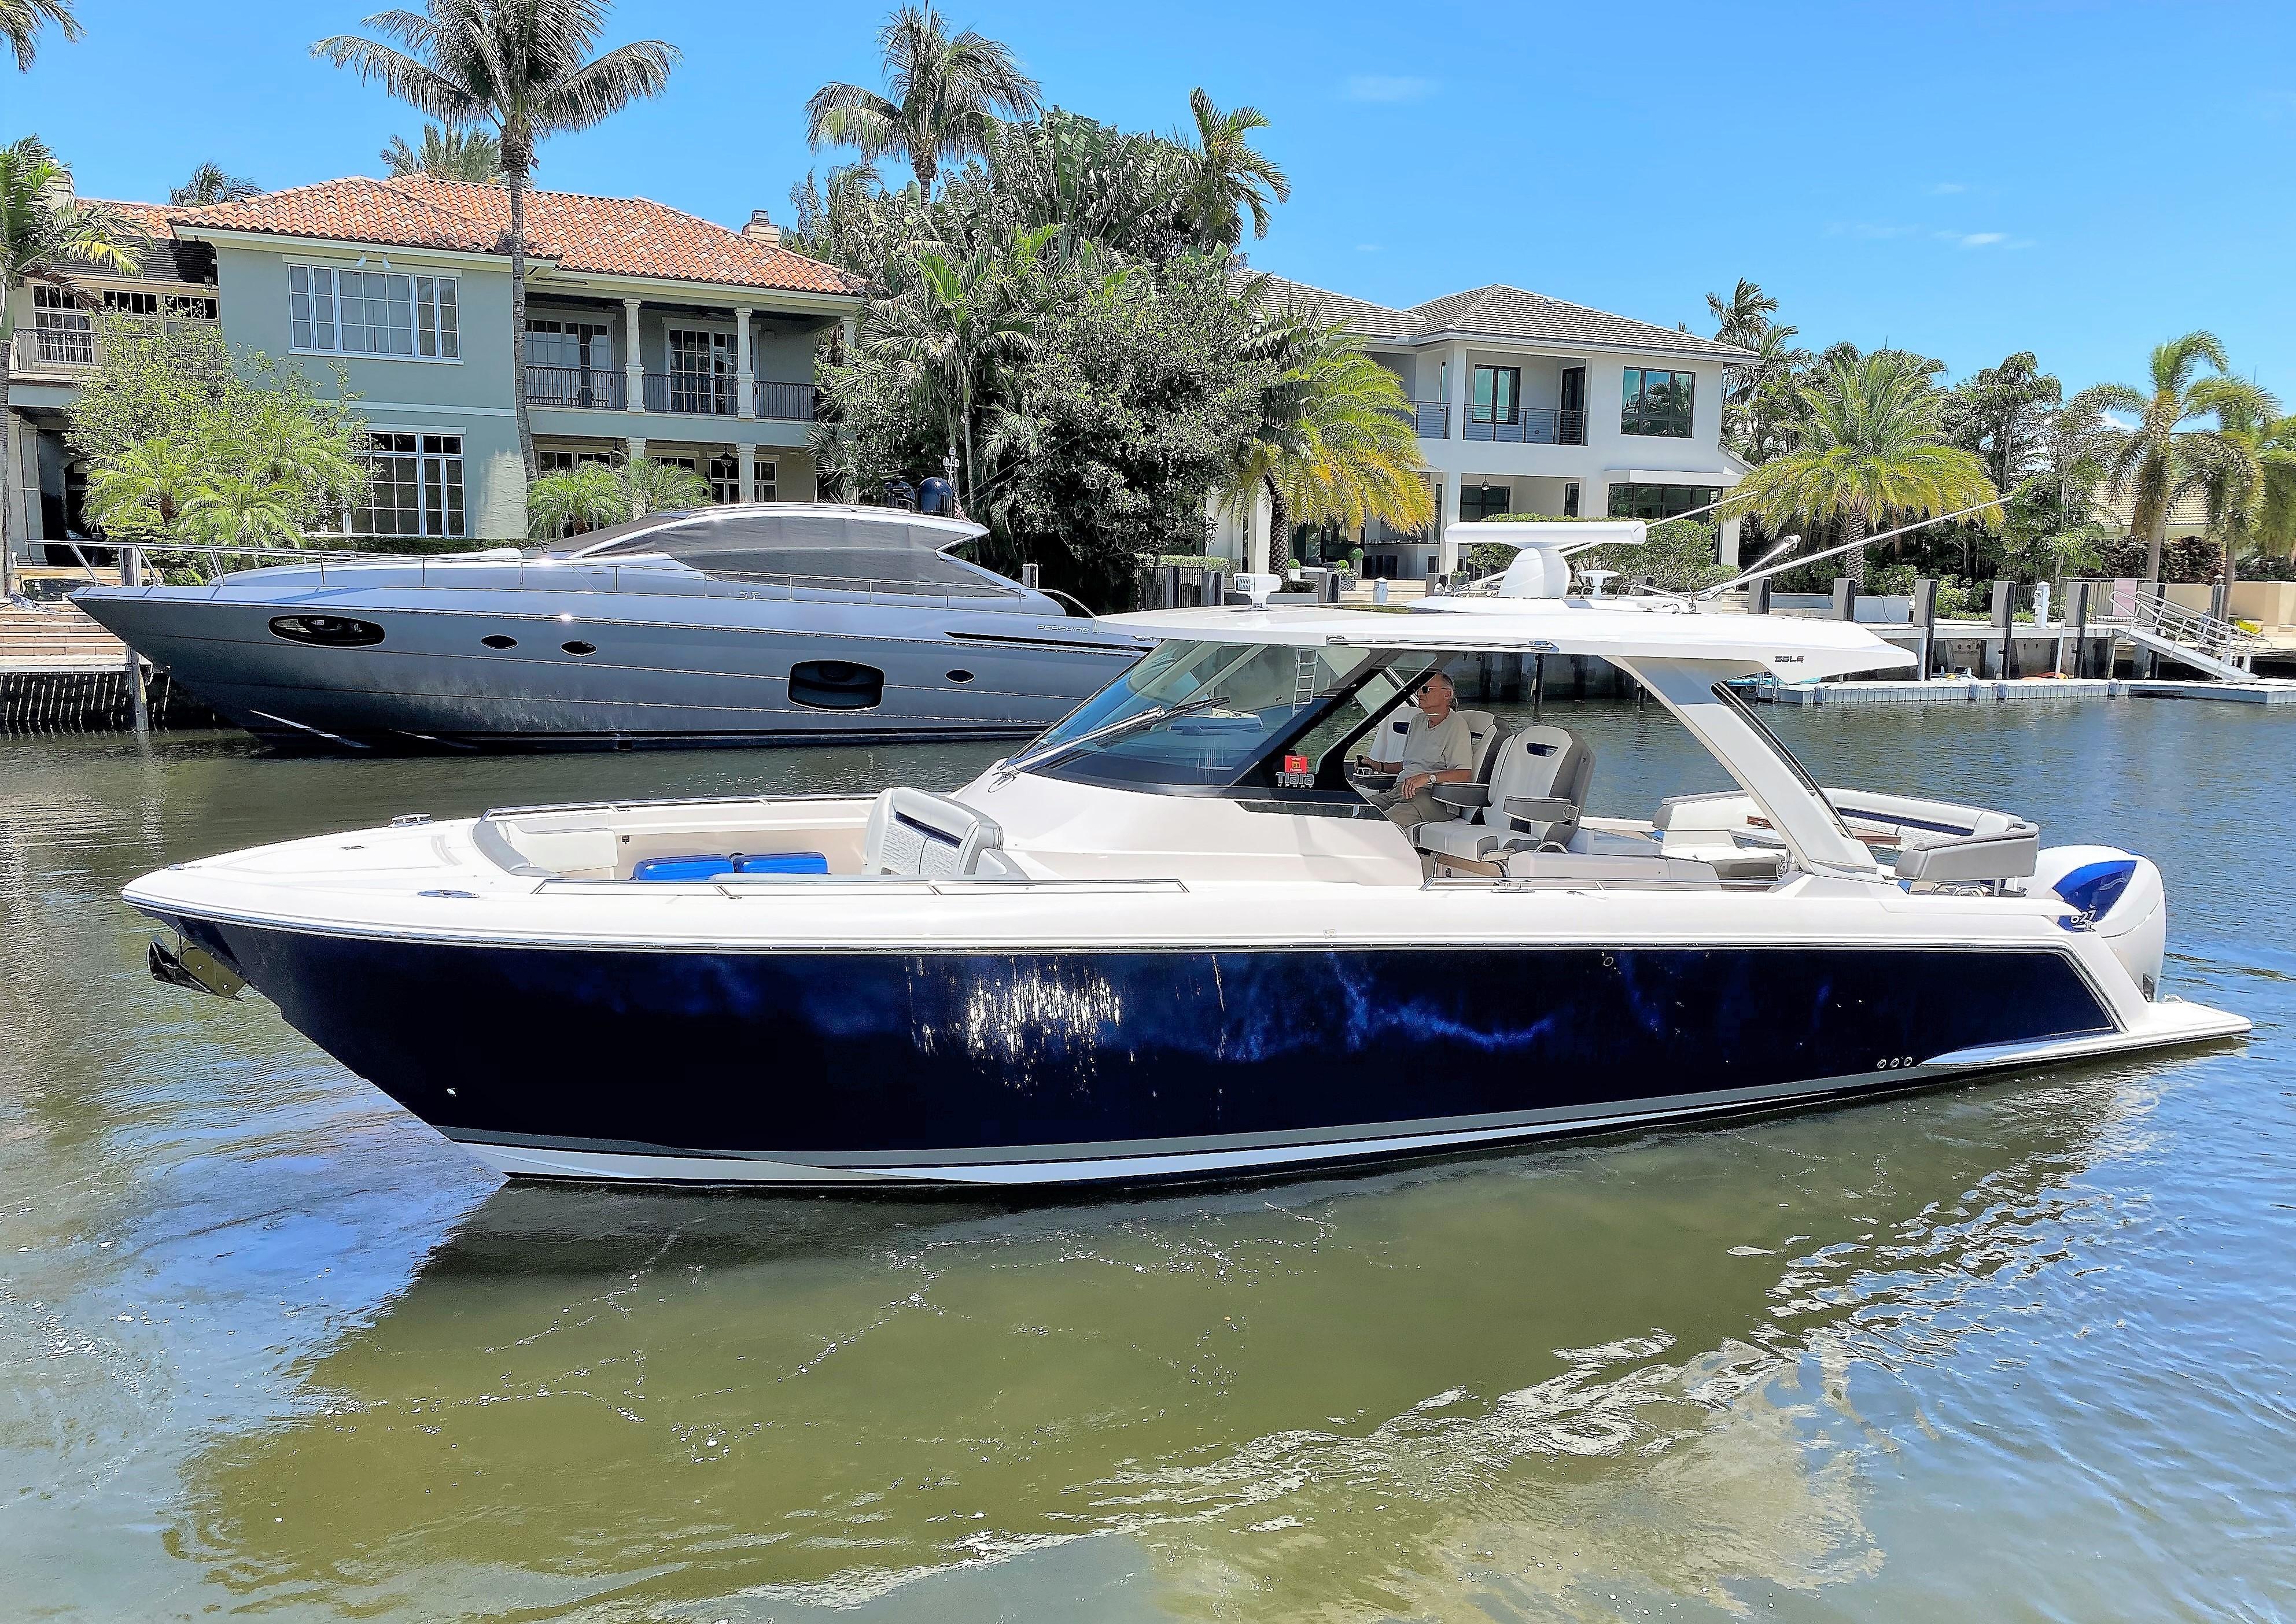 38 Tiara Sport 19 Steelaway Fort Lauderdale Florida Sold On 10 13 By Denison Yacht Sales